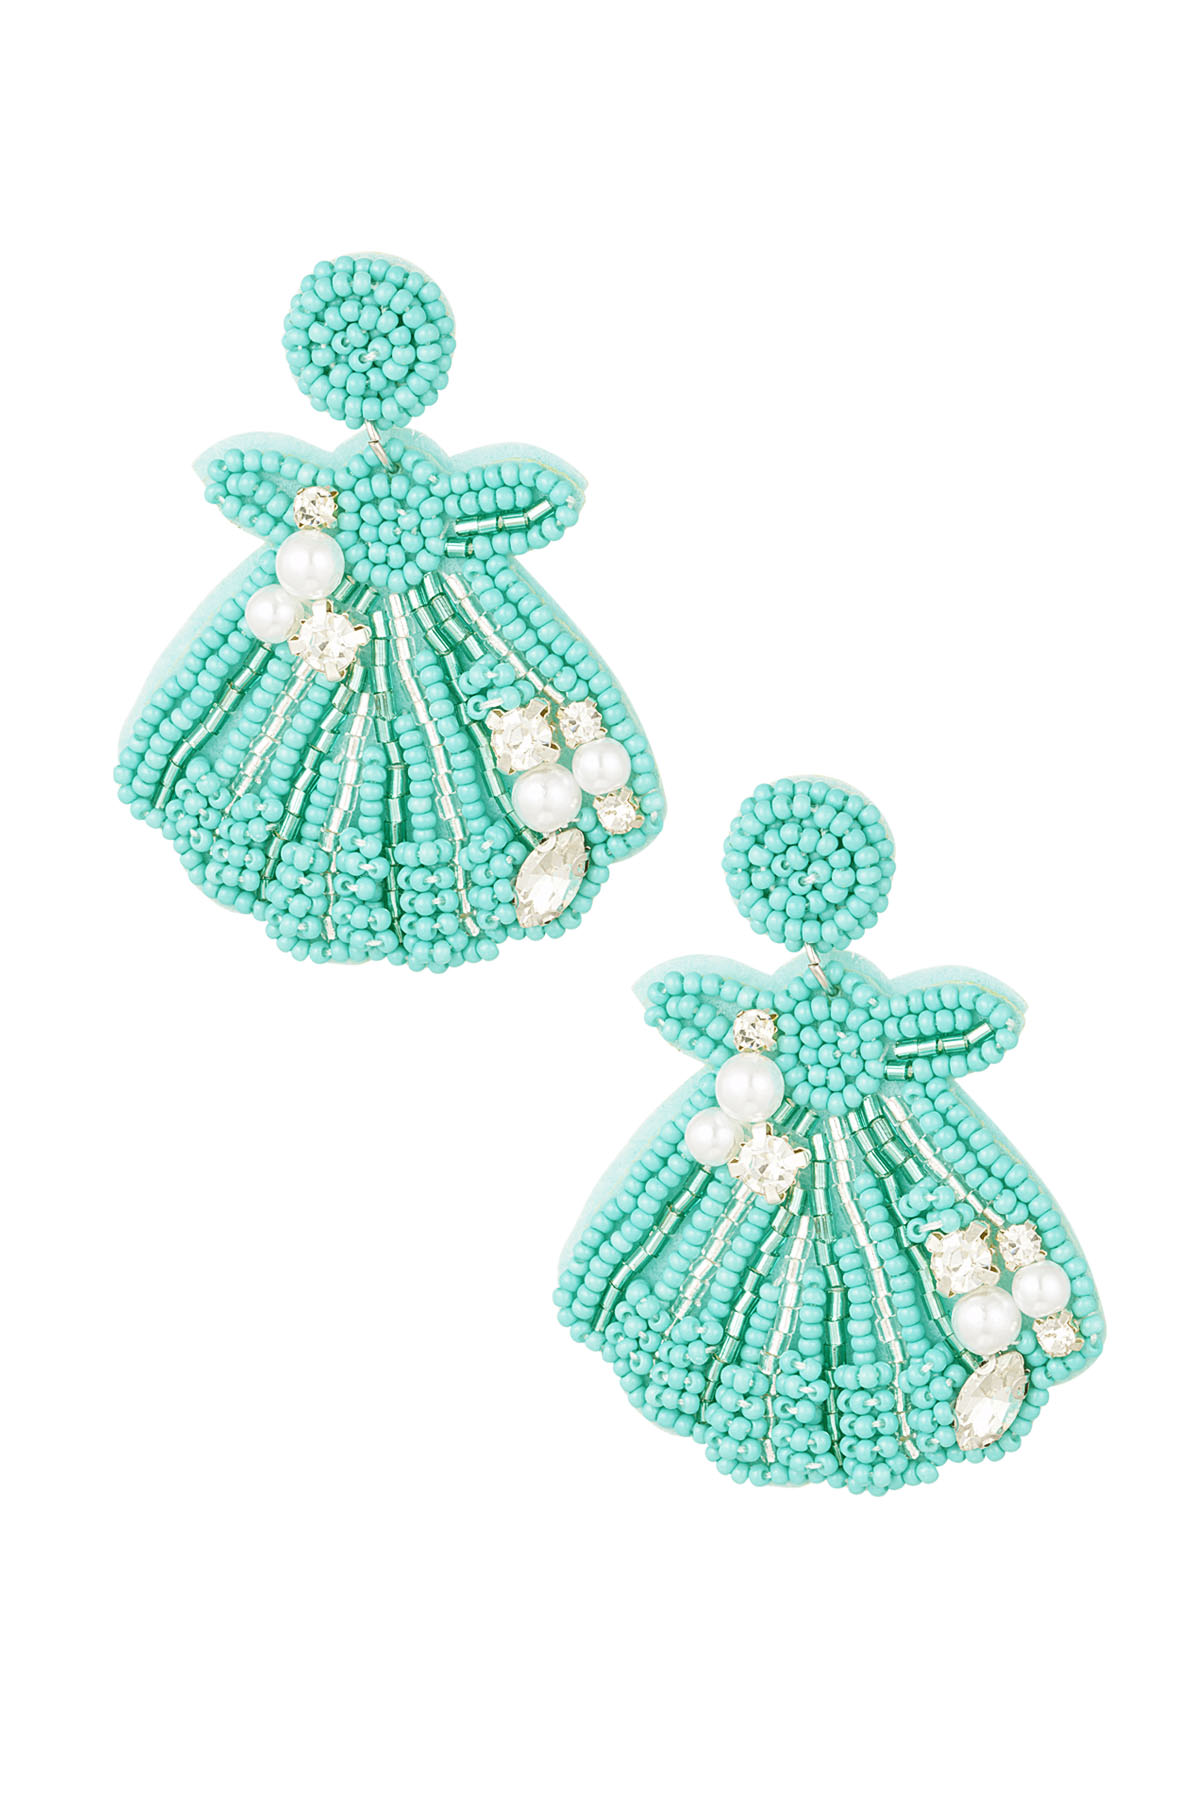 Earrings seashell - turquoise